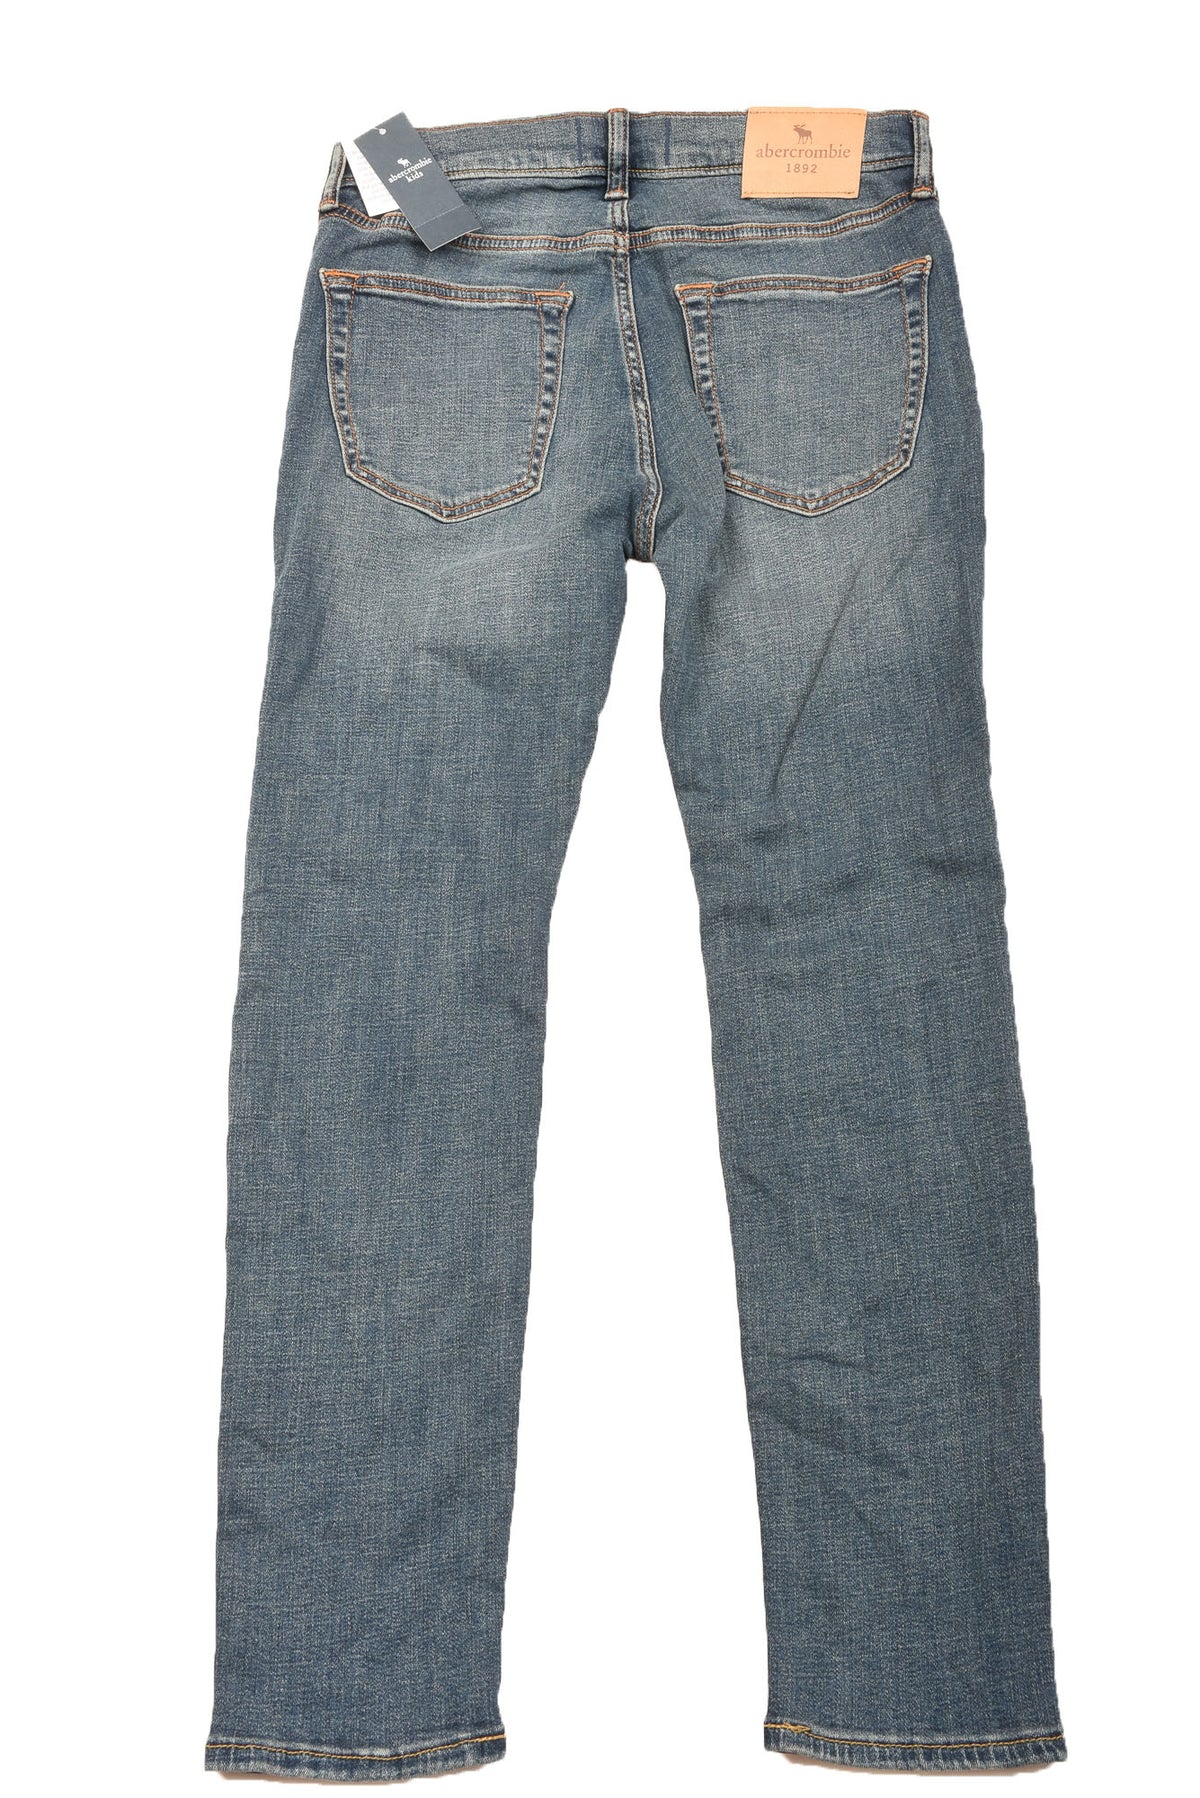 Abercrombie Kids Size 13/14 Girl&#39;s Jeans